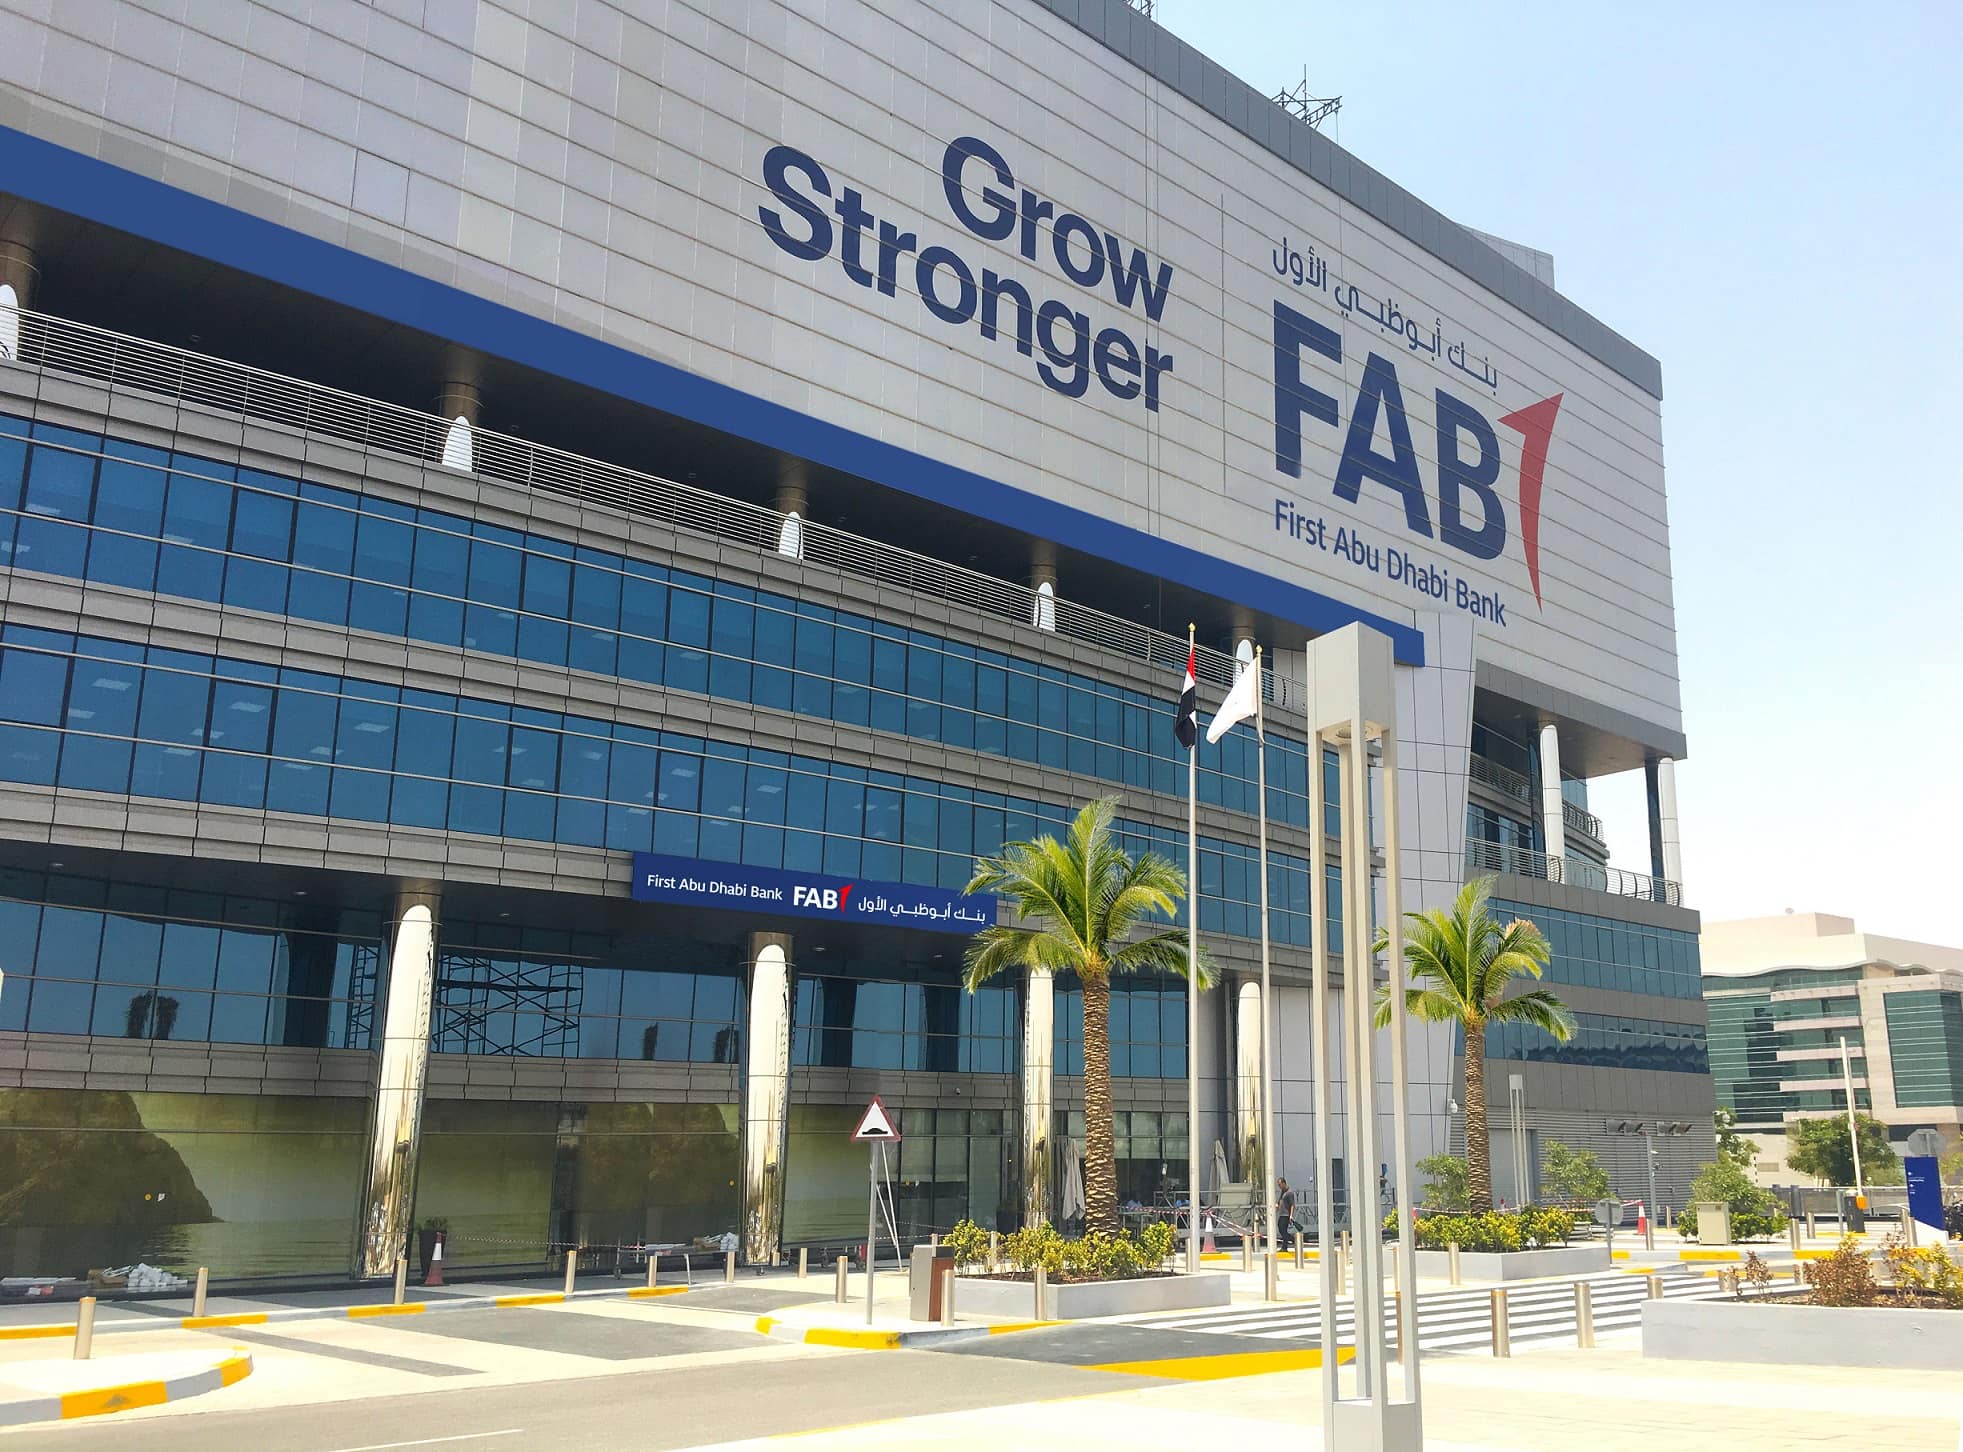 First Abu Dhabi Bank (FAB) building